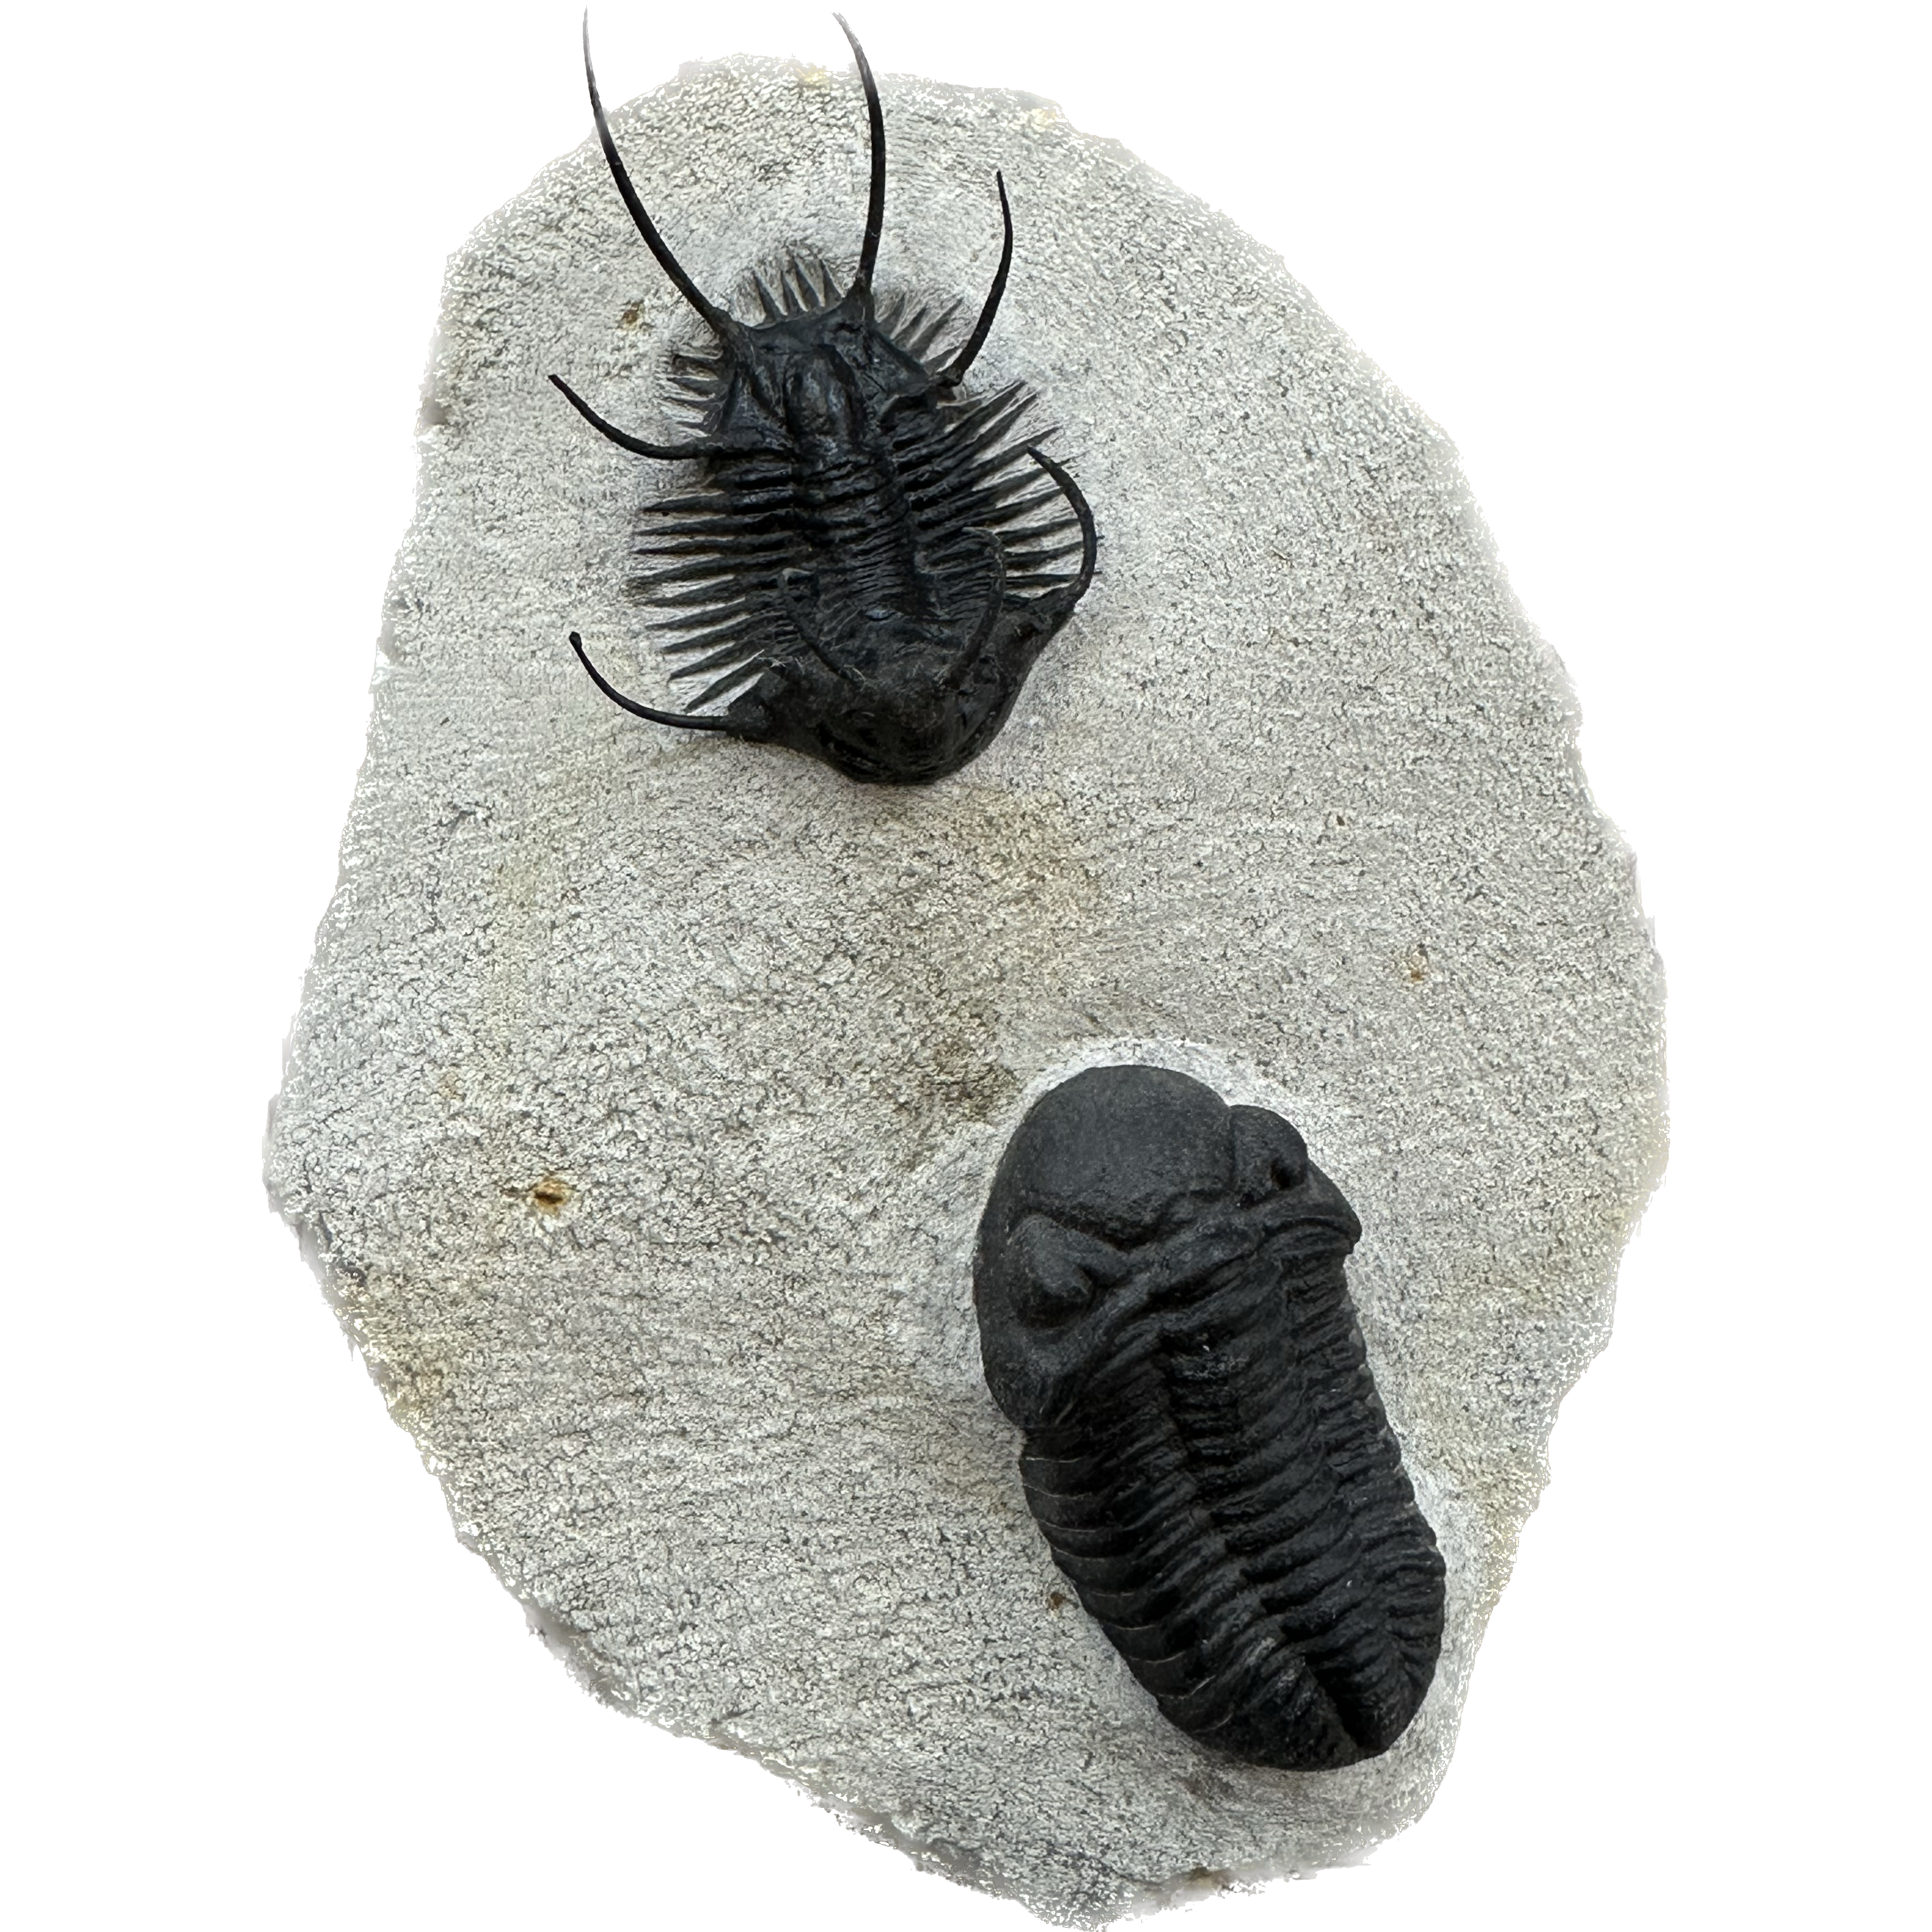 Devonian Trilobite Pair- Heavily restored but amazing Prehistoric Online